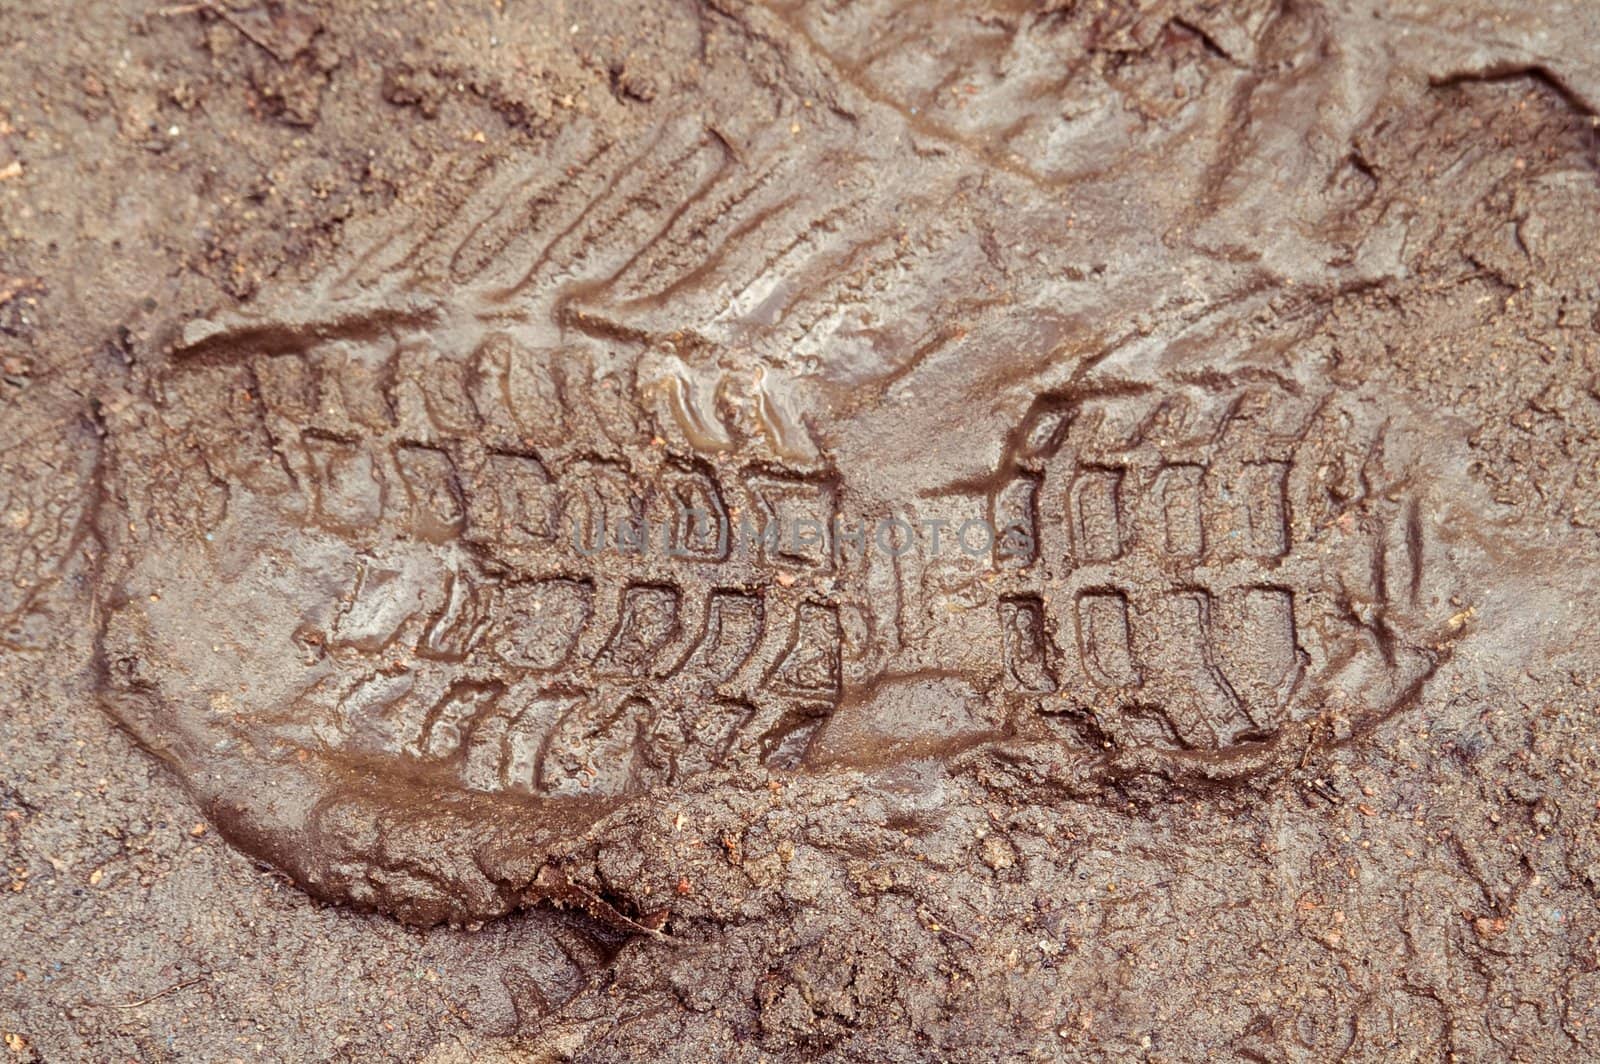 Boot print in brown mud by lilsla